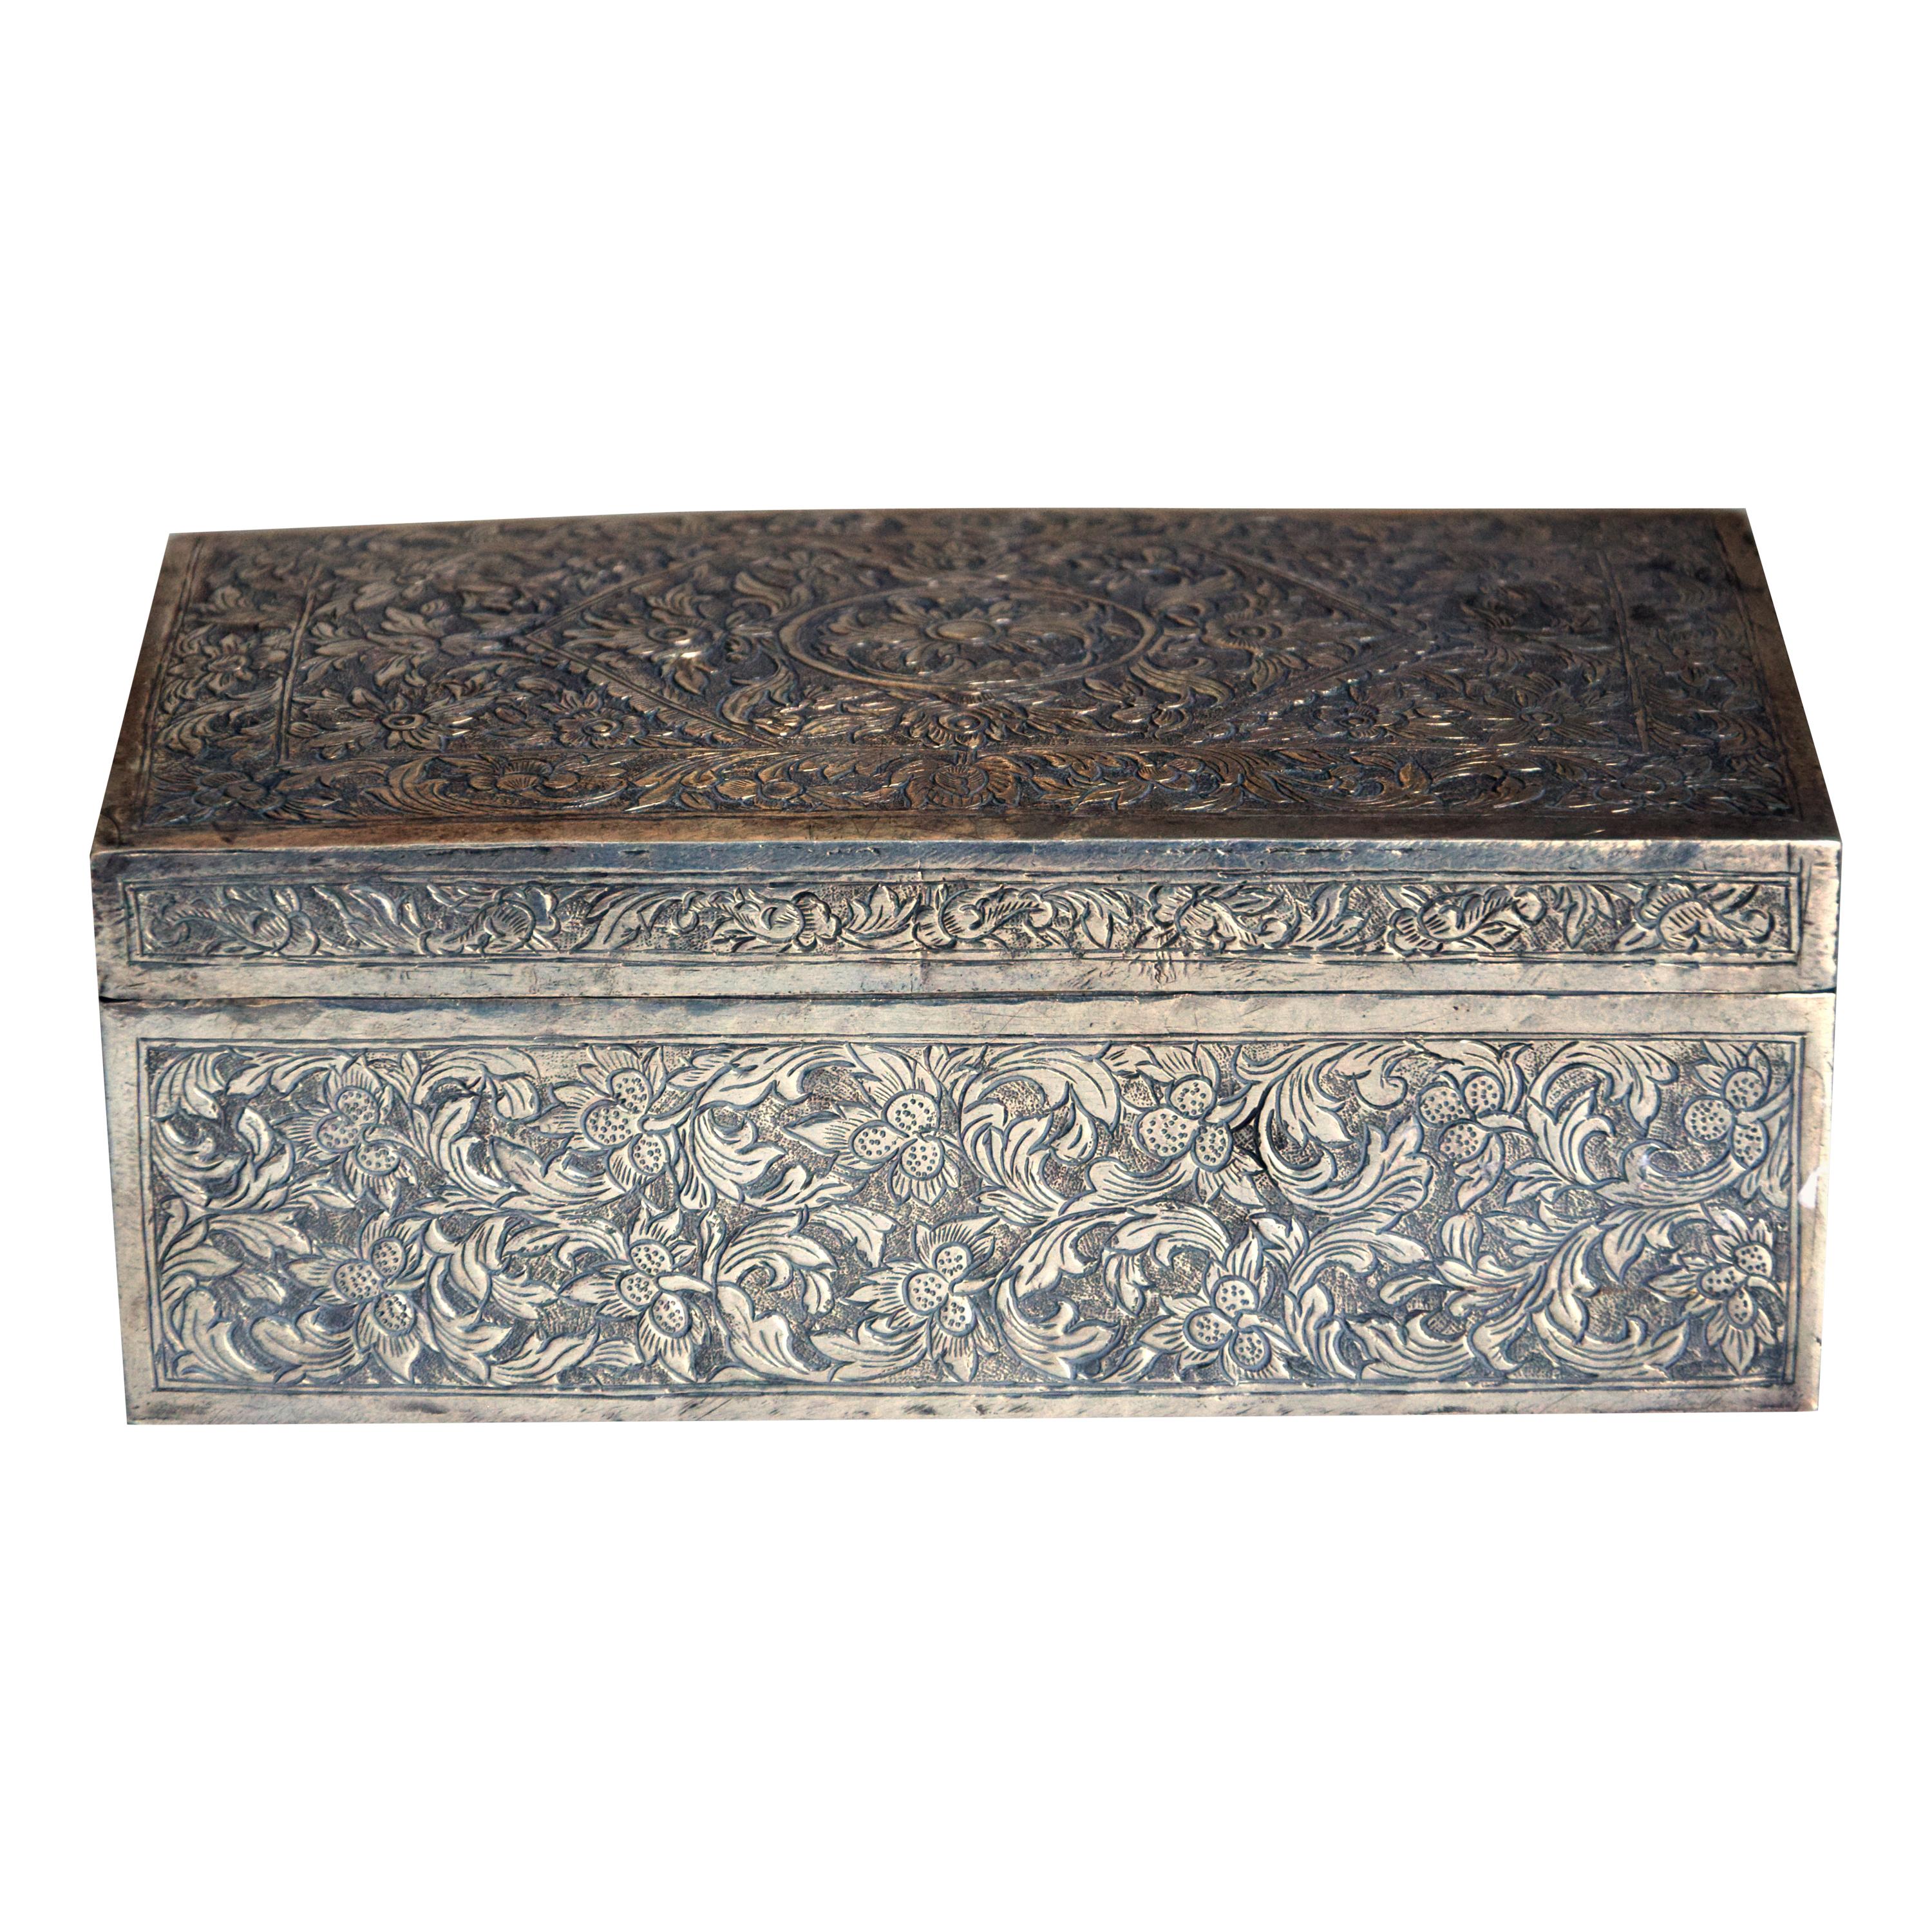 Ancient Persian Silver Box, 19th Century